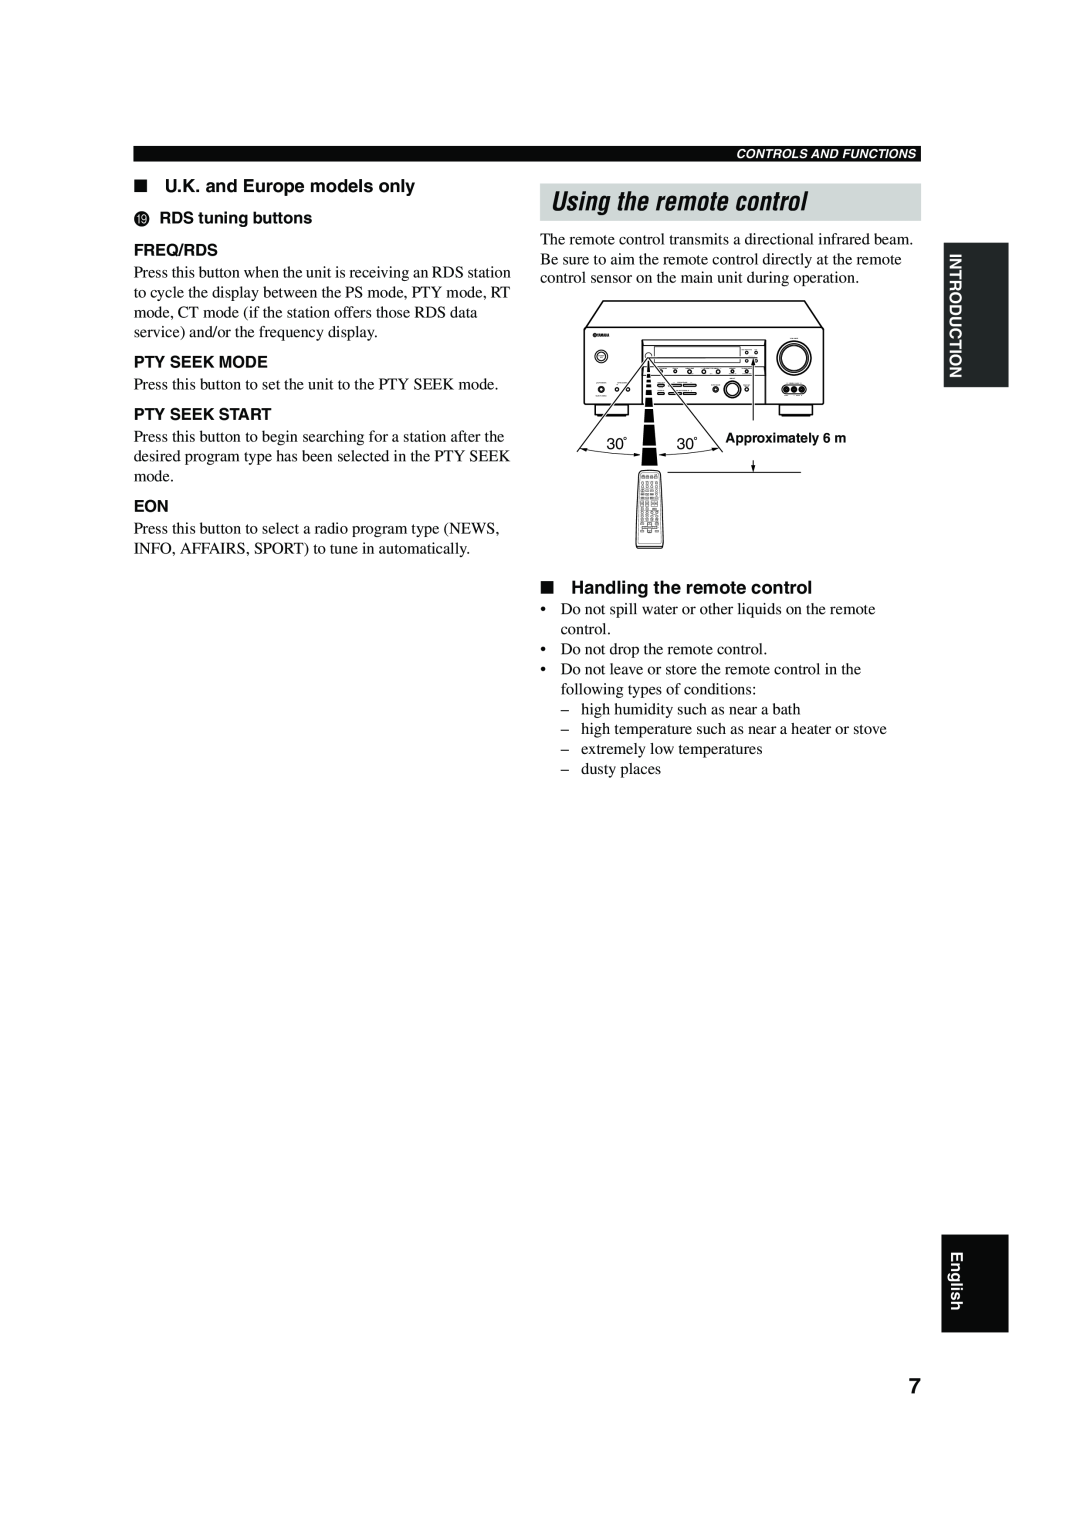 Yamaha RX-V450 Using the remote control, Handling the remote control, IRDS tuning buttons FREQ/RDS, Pty Seek Mode 